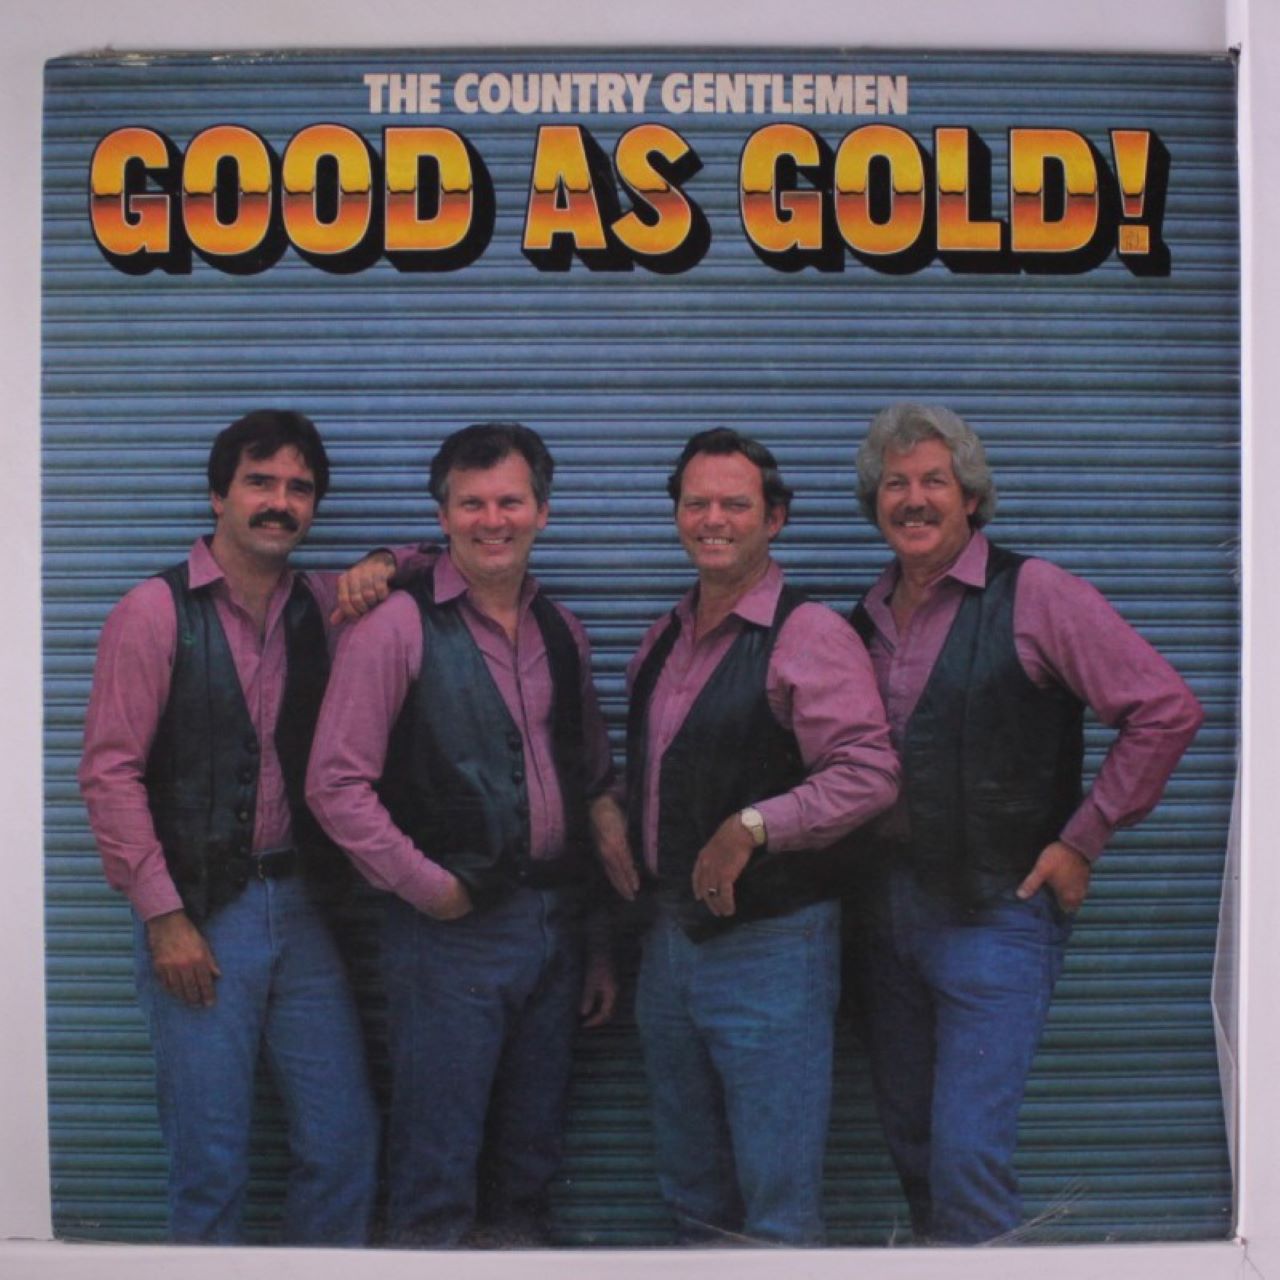 Country Gentlemen – Good As Gold cover album